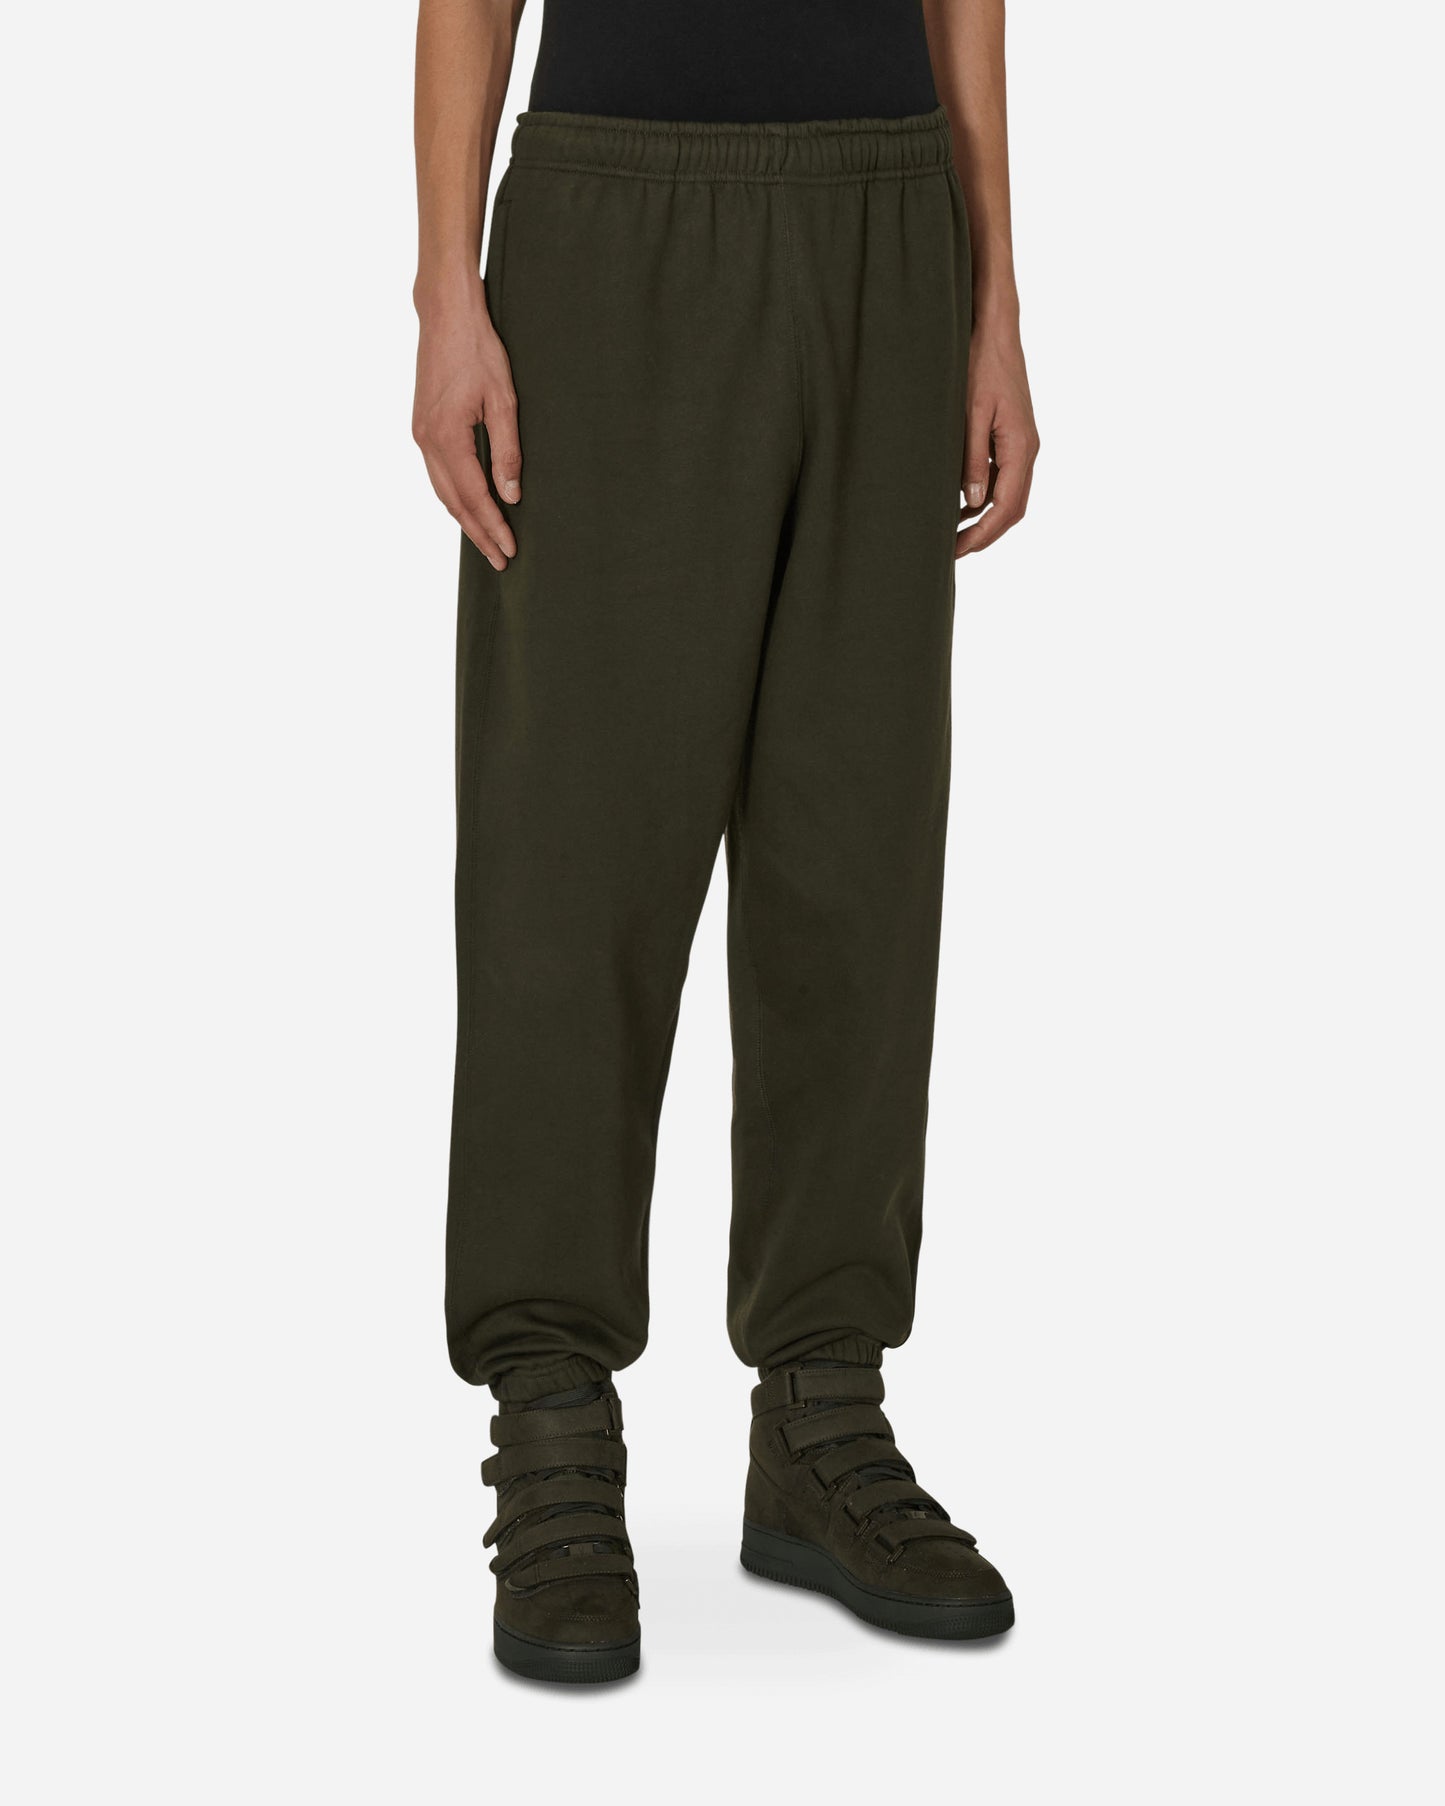 Nike La Flc Pant Sequoia/Mushroom Pants Trousers DQ7752-355